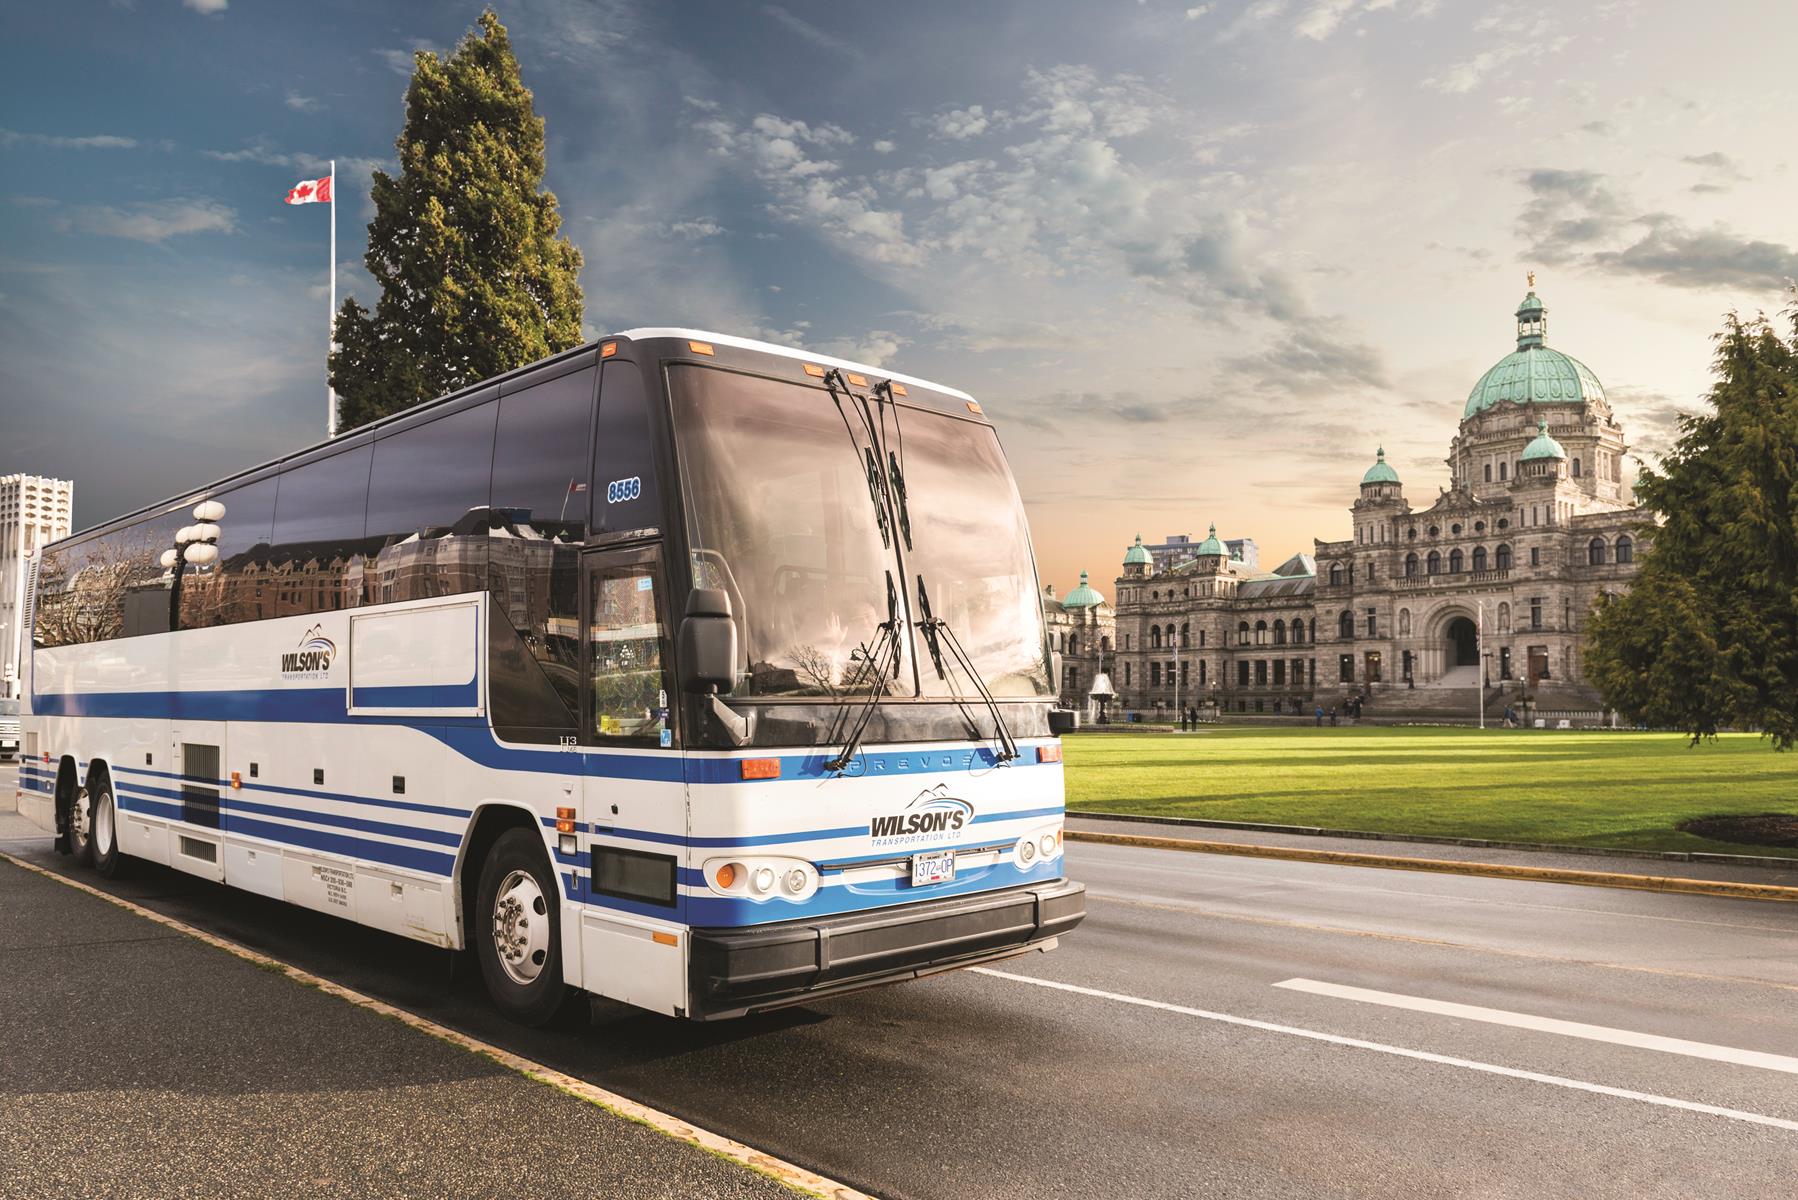 Victoria - Wilsons Bus at Victoria Legislature Building - Canadian Vacation